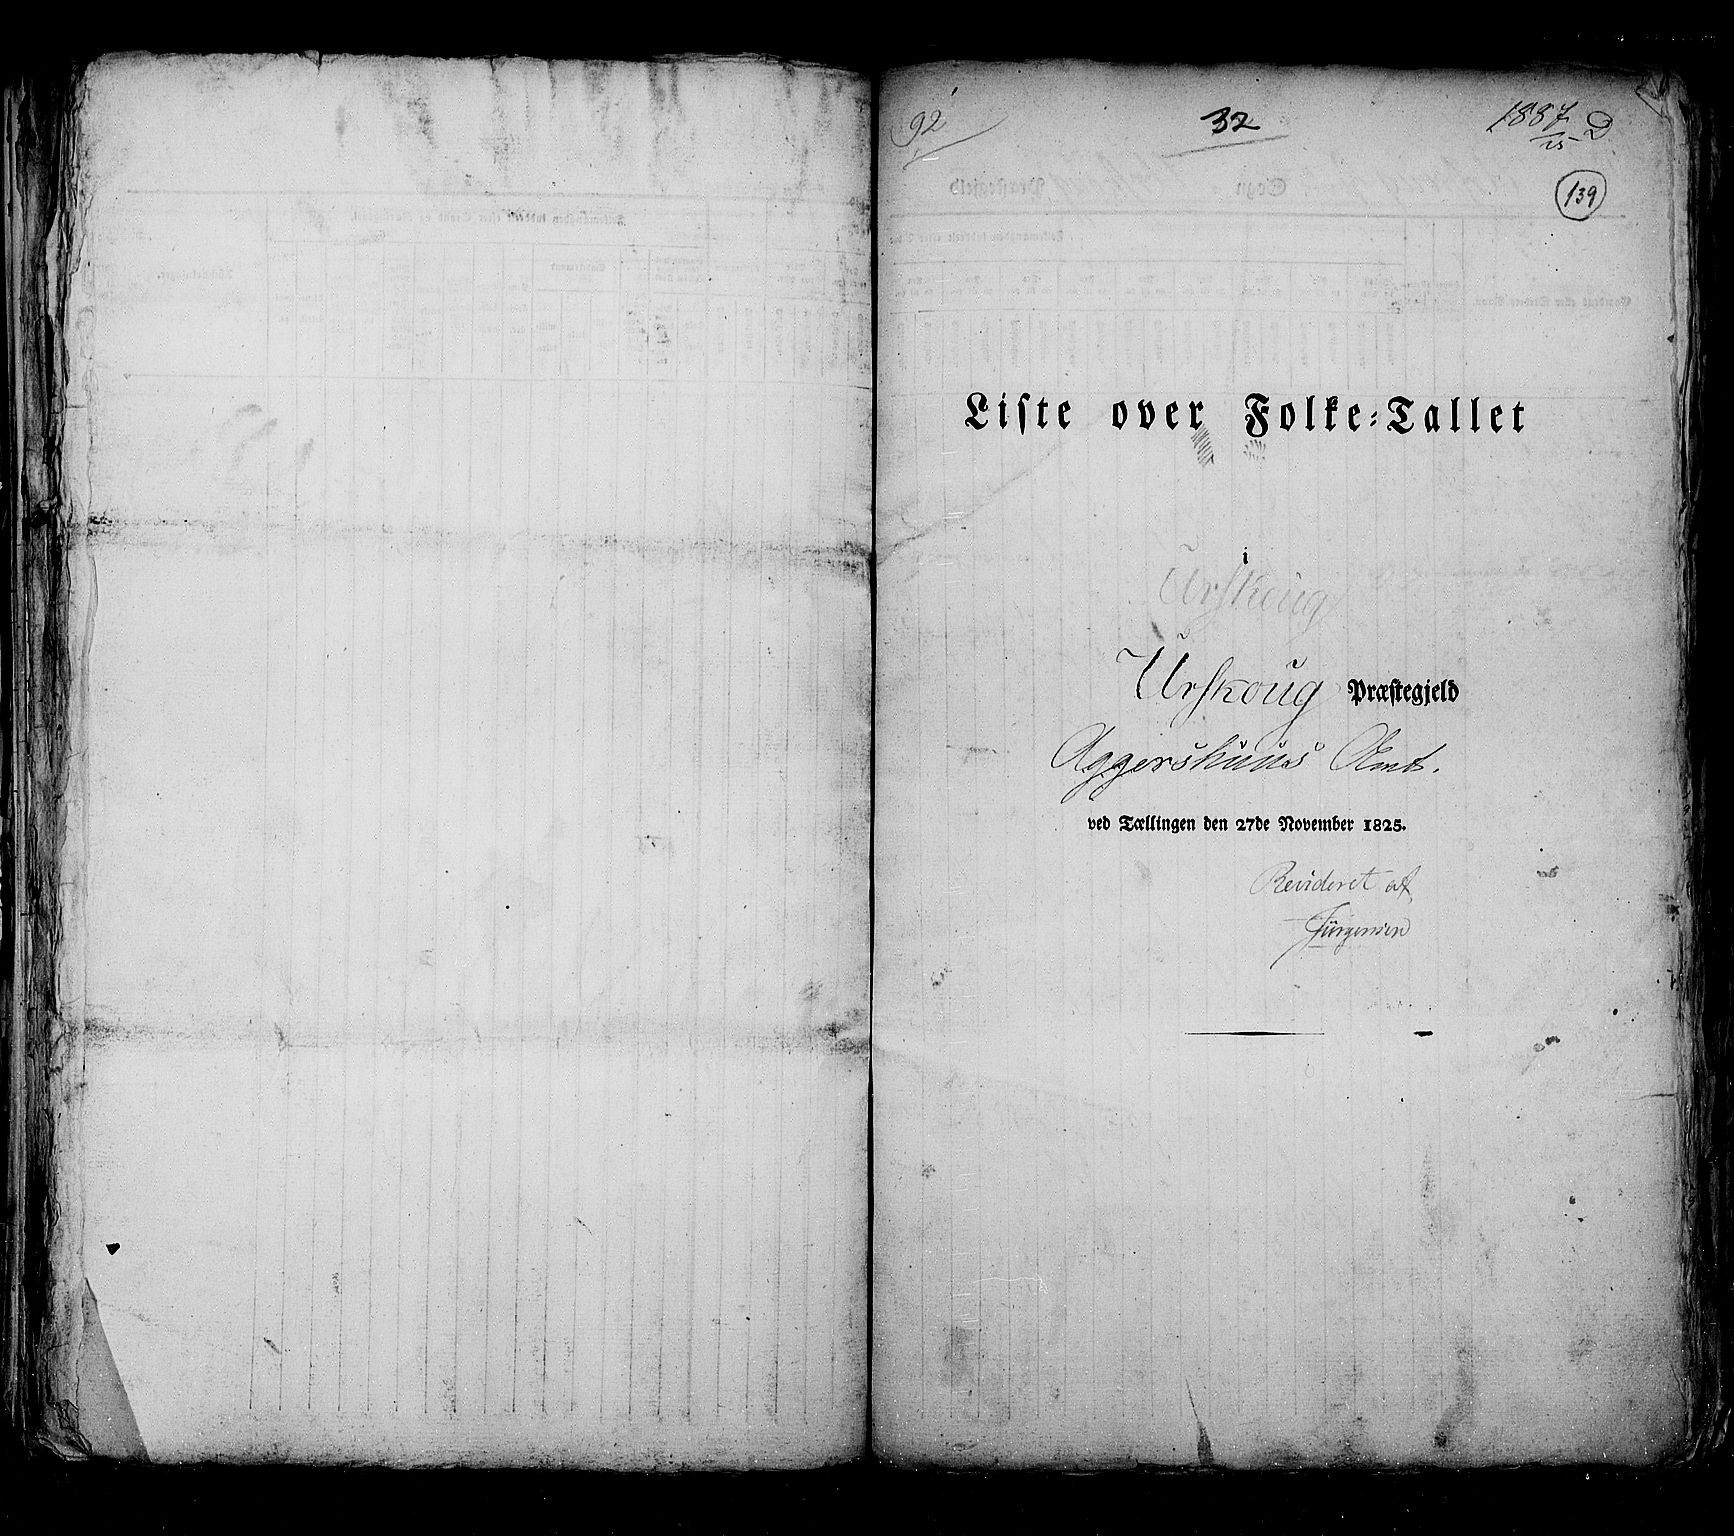 RA, Folketellingen 1825, bind 4: Akershus amt, 1825, s. 139